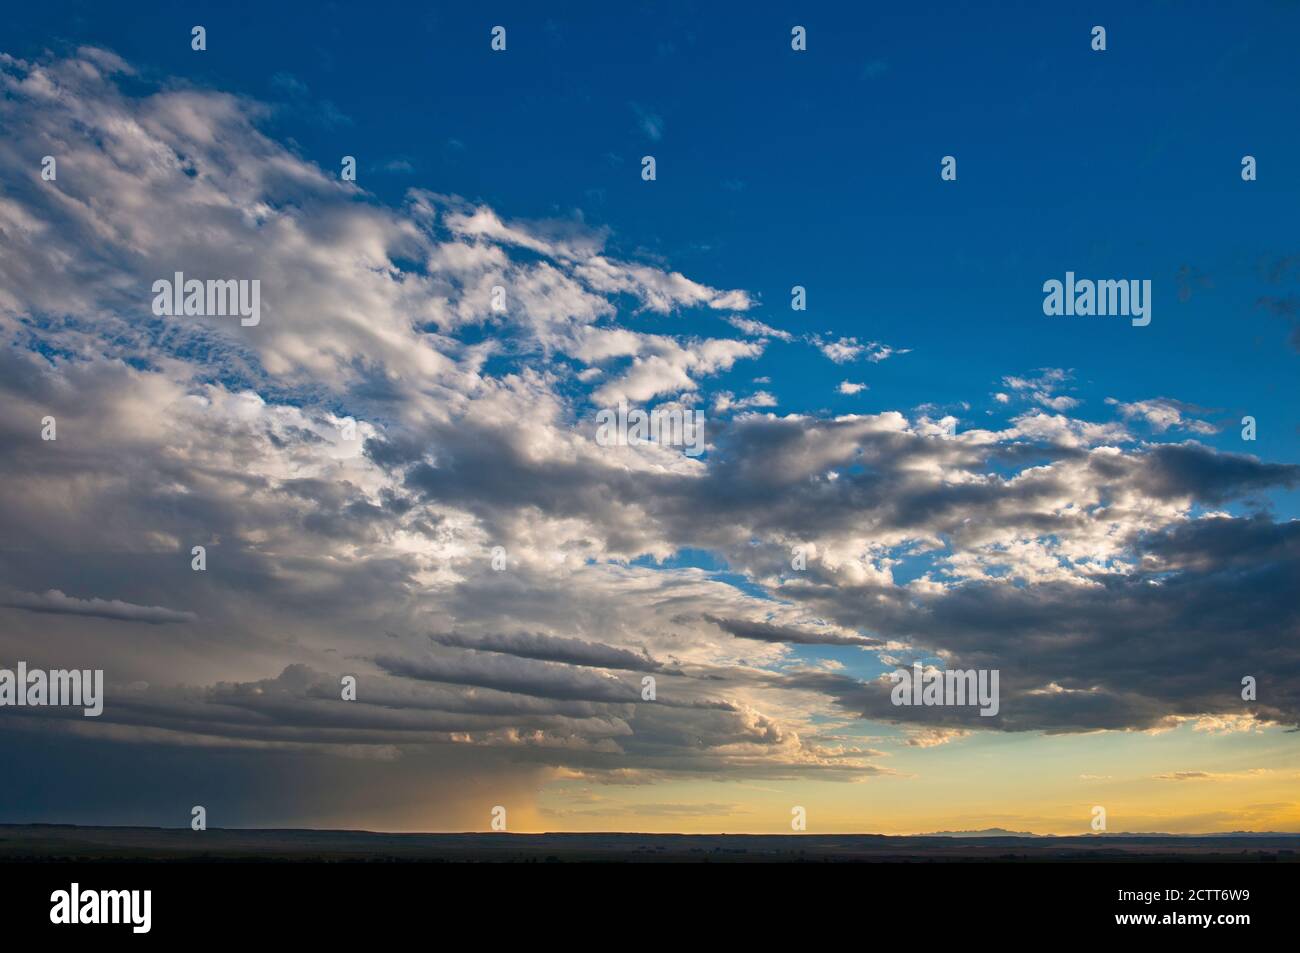 USA, South Dakota, Sunset with parting sun over prairie Stock Photo